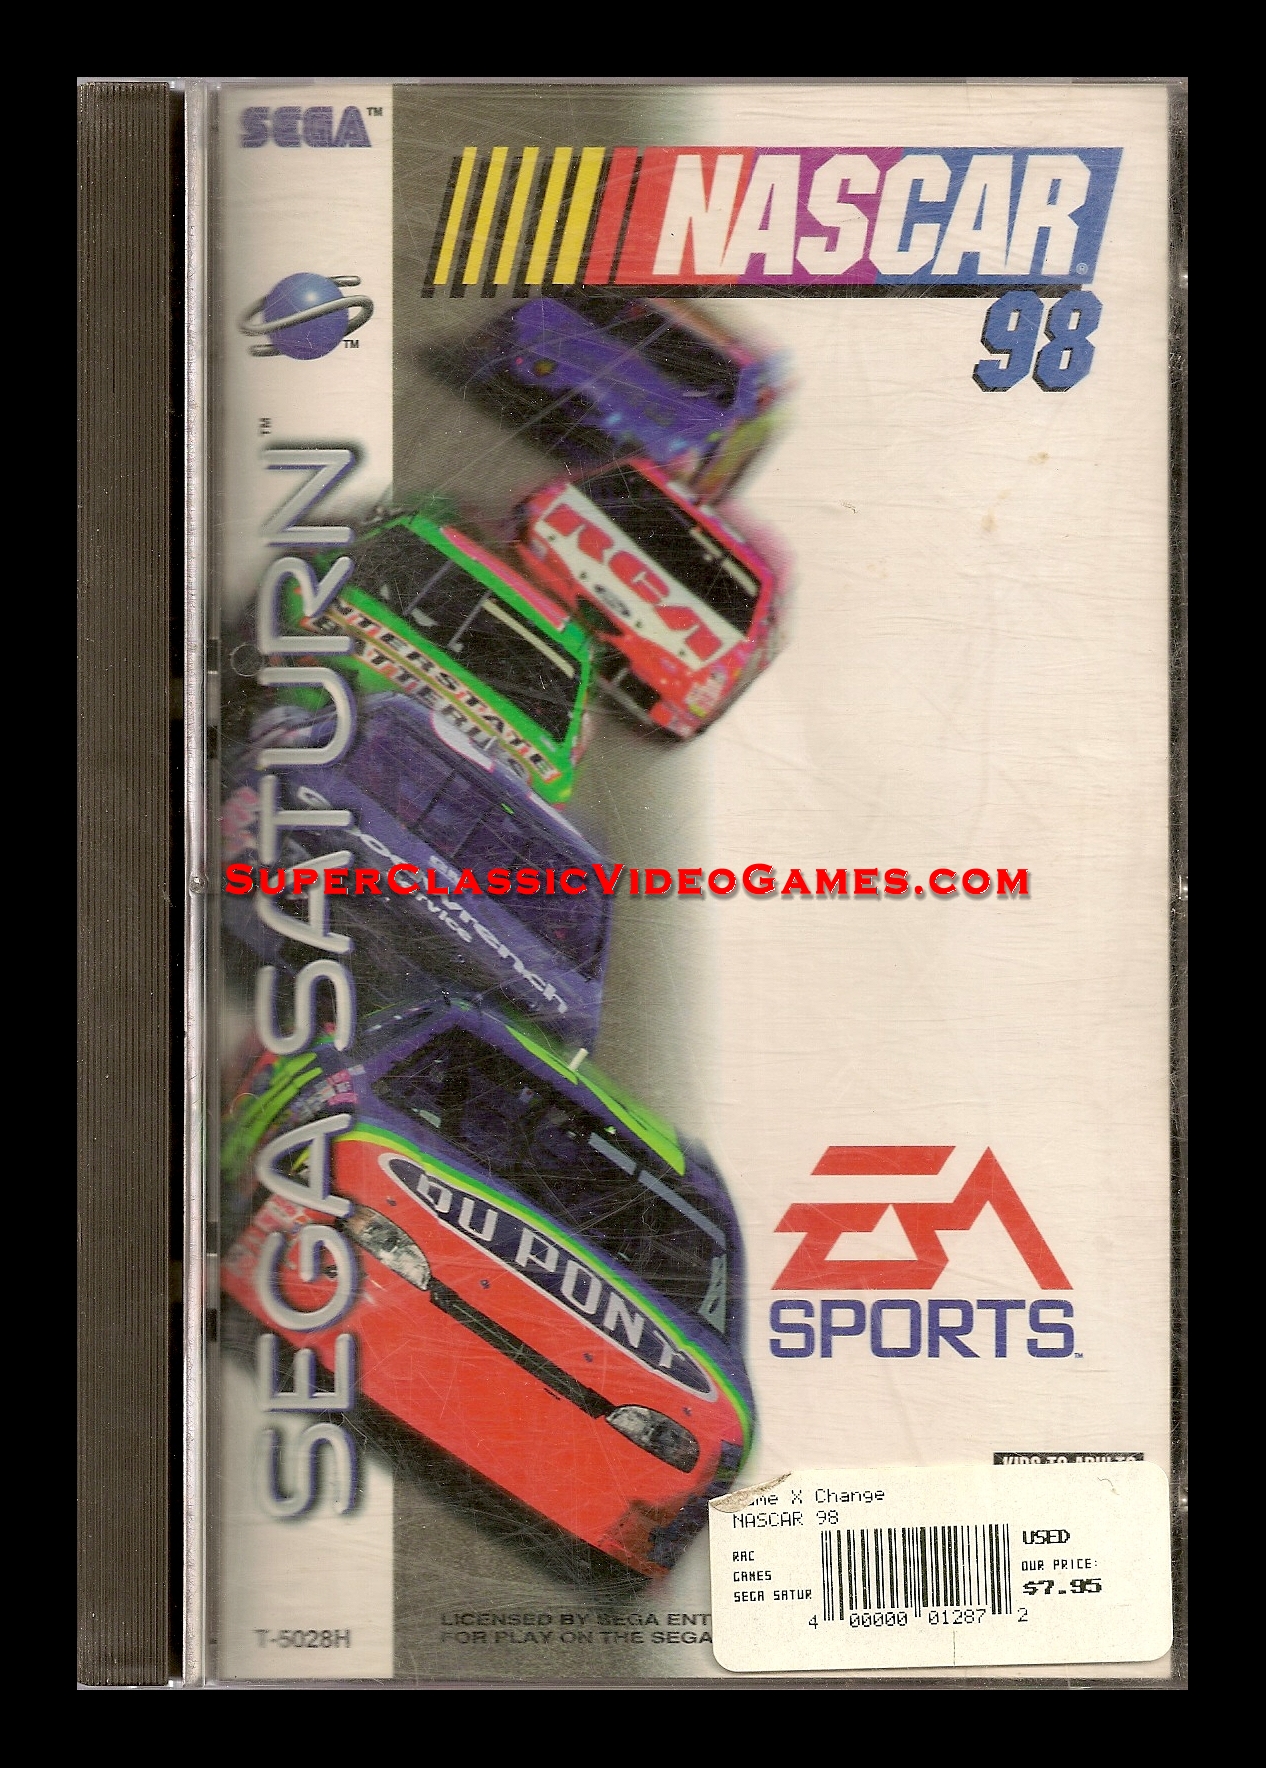 SEGA SATURN - NASCAR 98 front